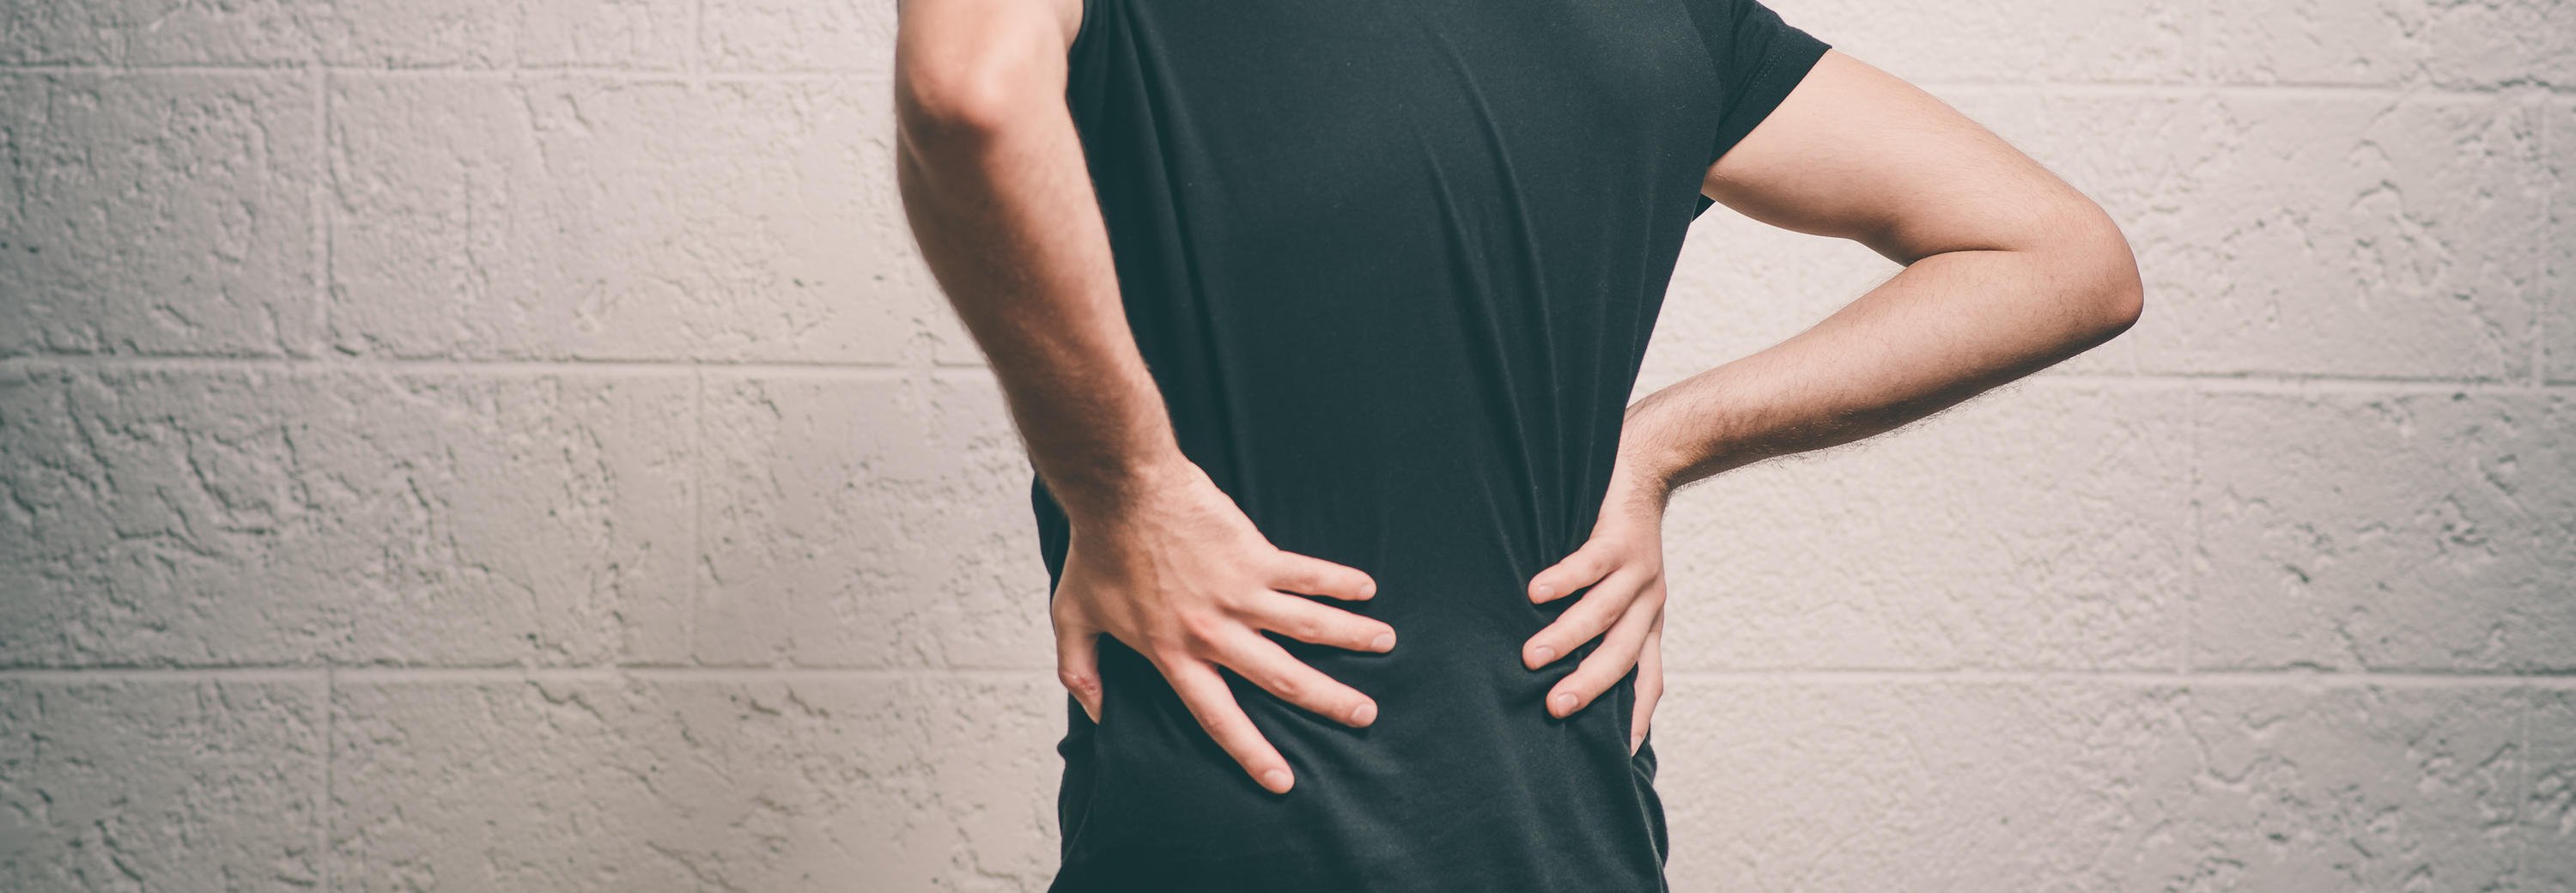 How to fix chronic back pain | Mind Pump Media